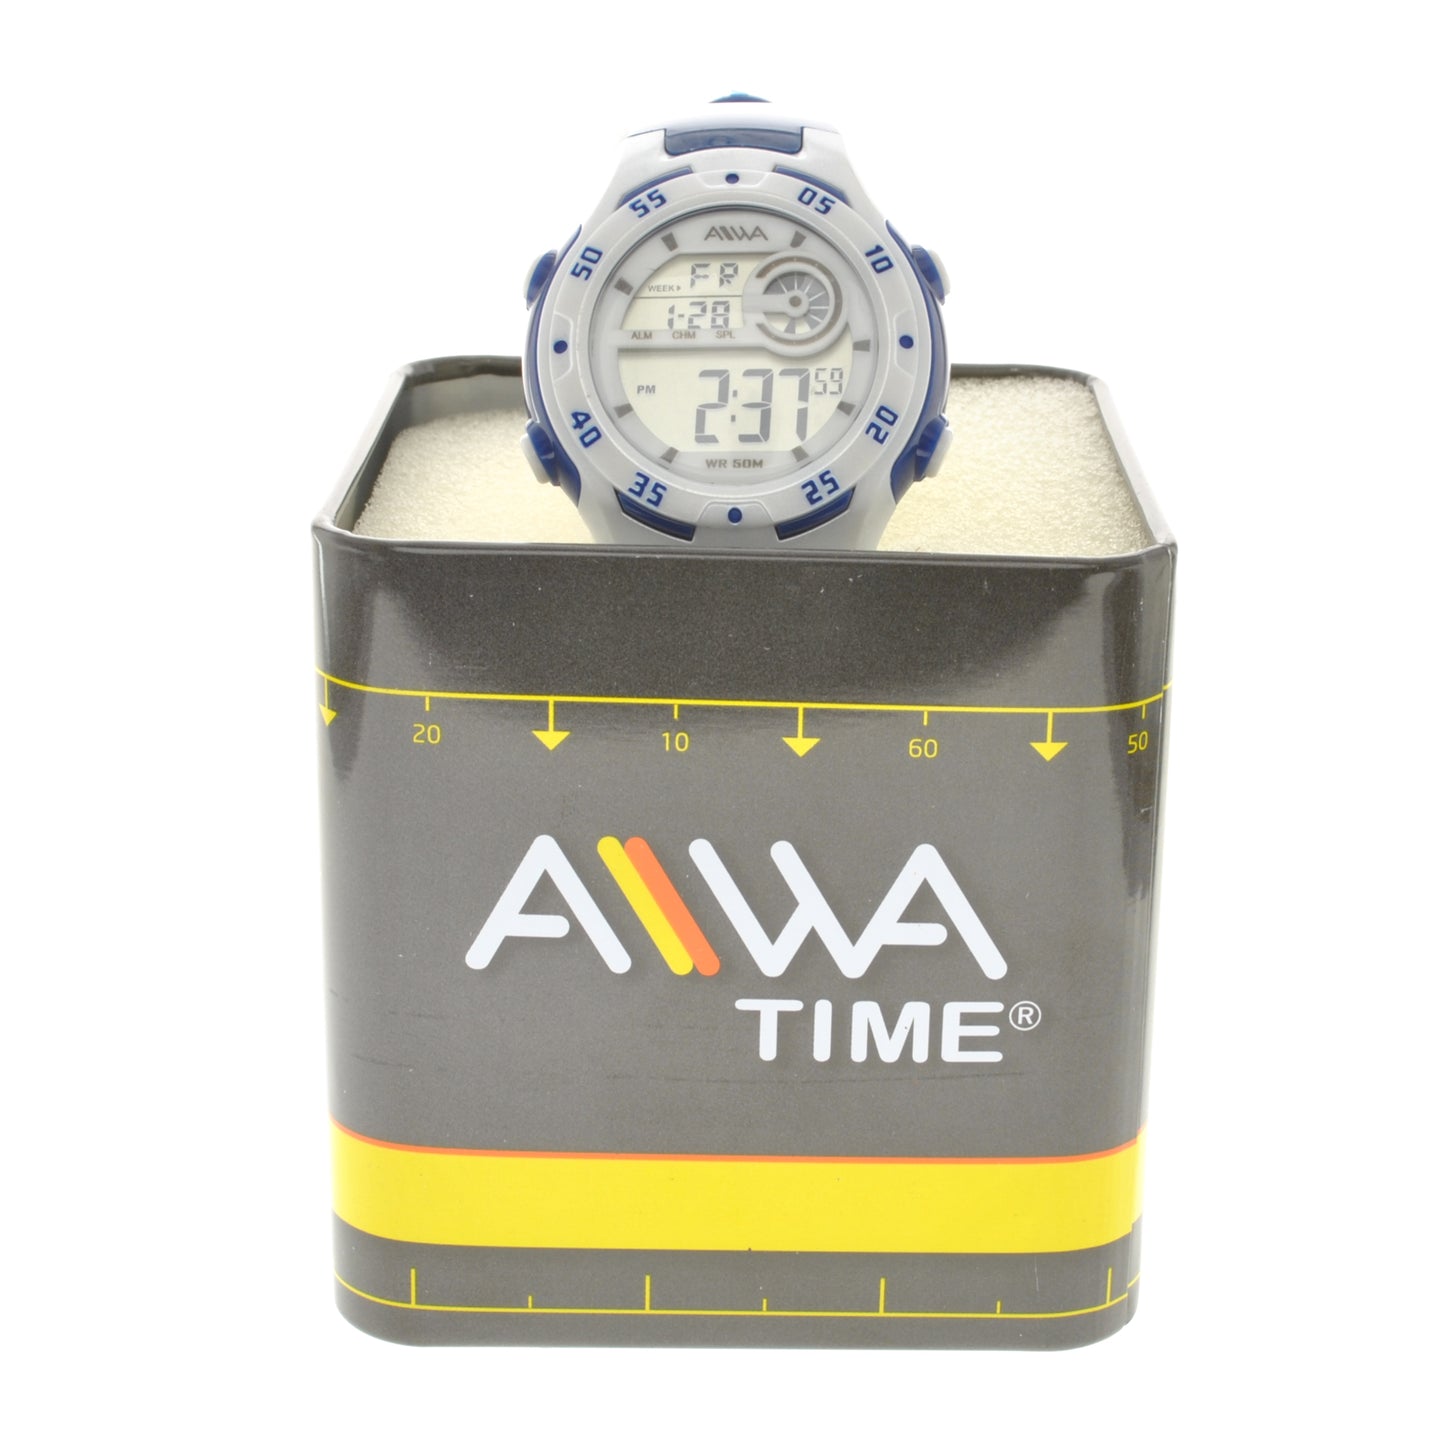 art. 10314 004AZ - AIWA Time - Reloj Digital Crono Alarma, Dama, AIWA Time, Sumergible 5 ATM